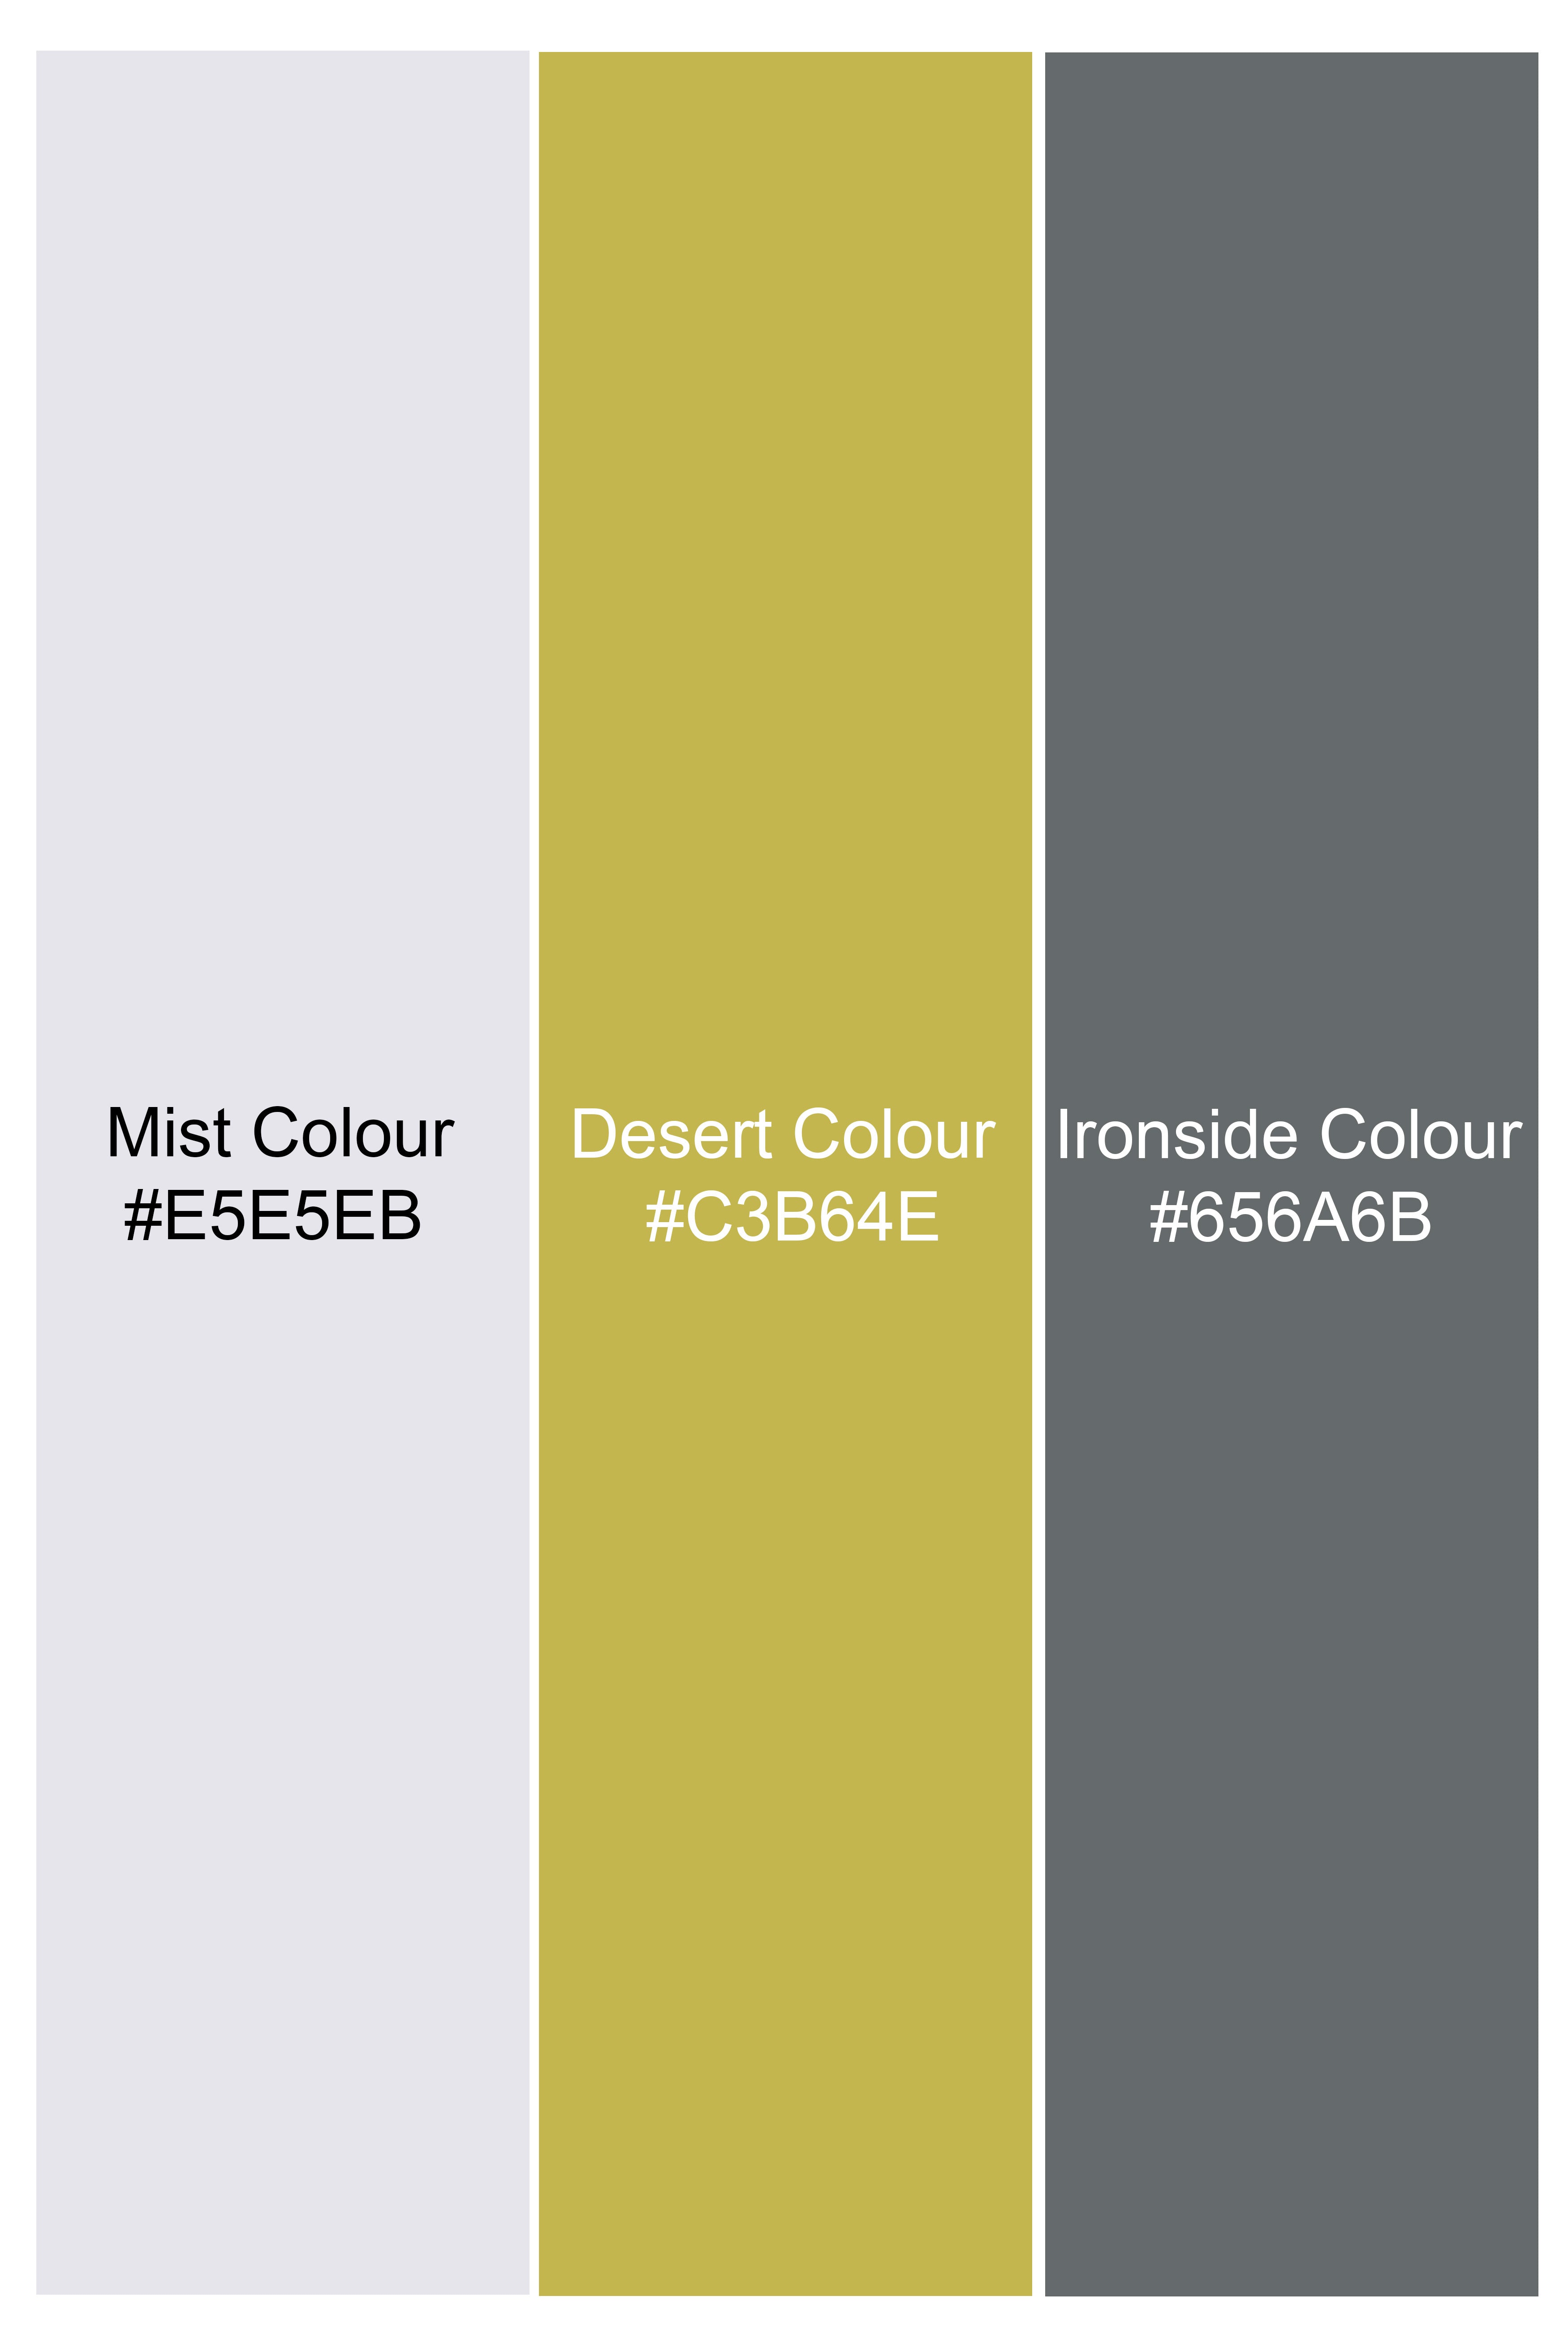 Mist Gray Multicolour Printed Super Soft Premium Cotton Shirt